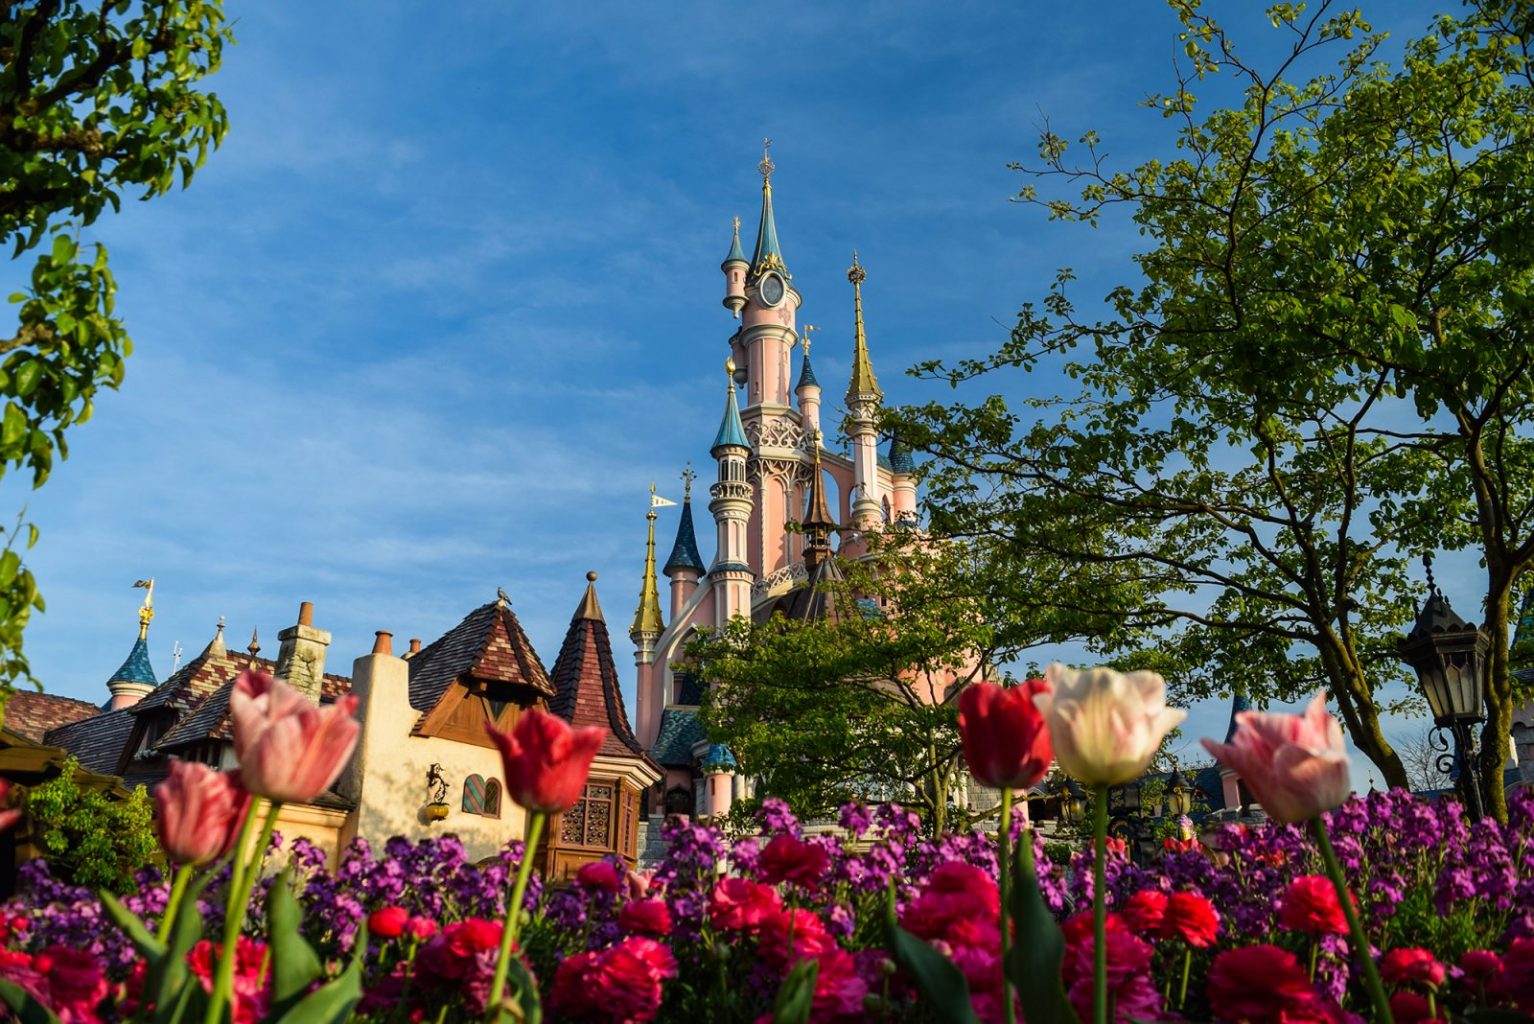 A low shot of the Disneyland Paris castle showcasing beautiful flowers